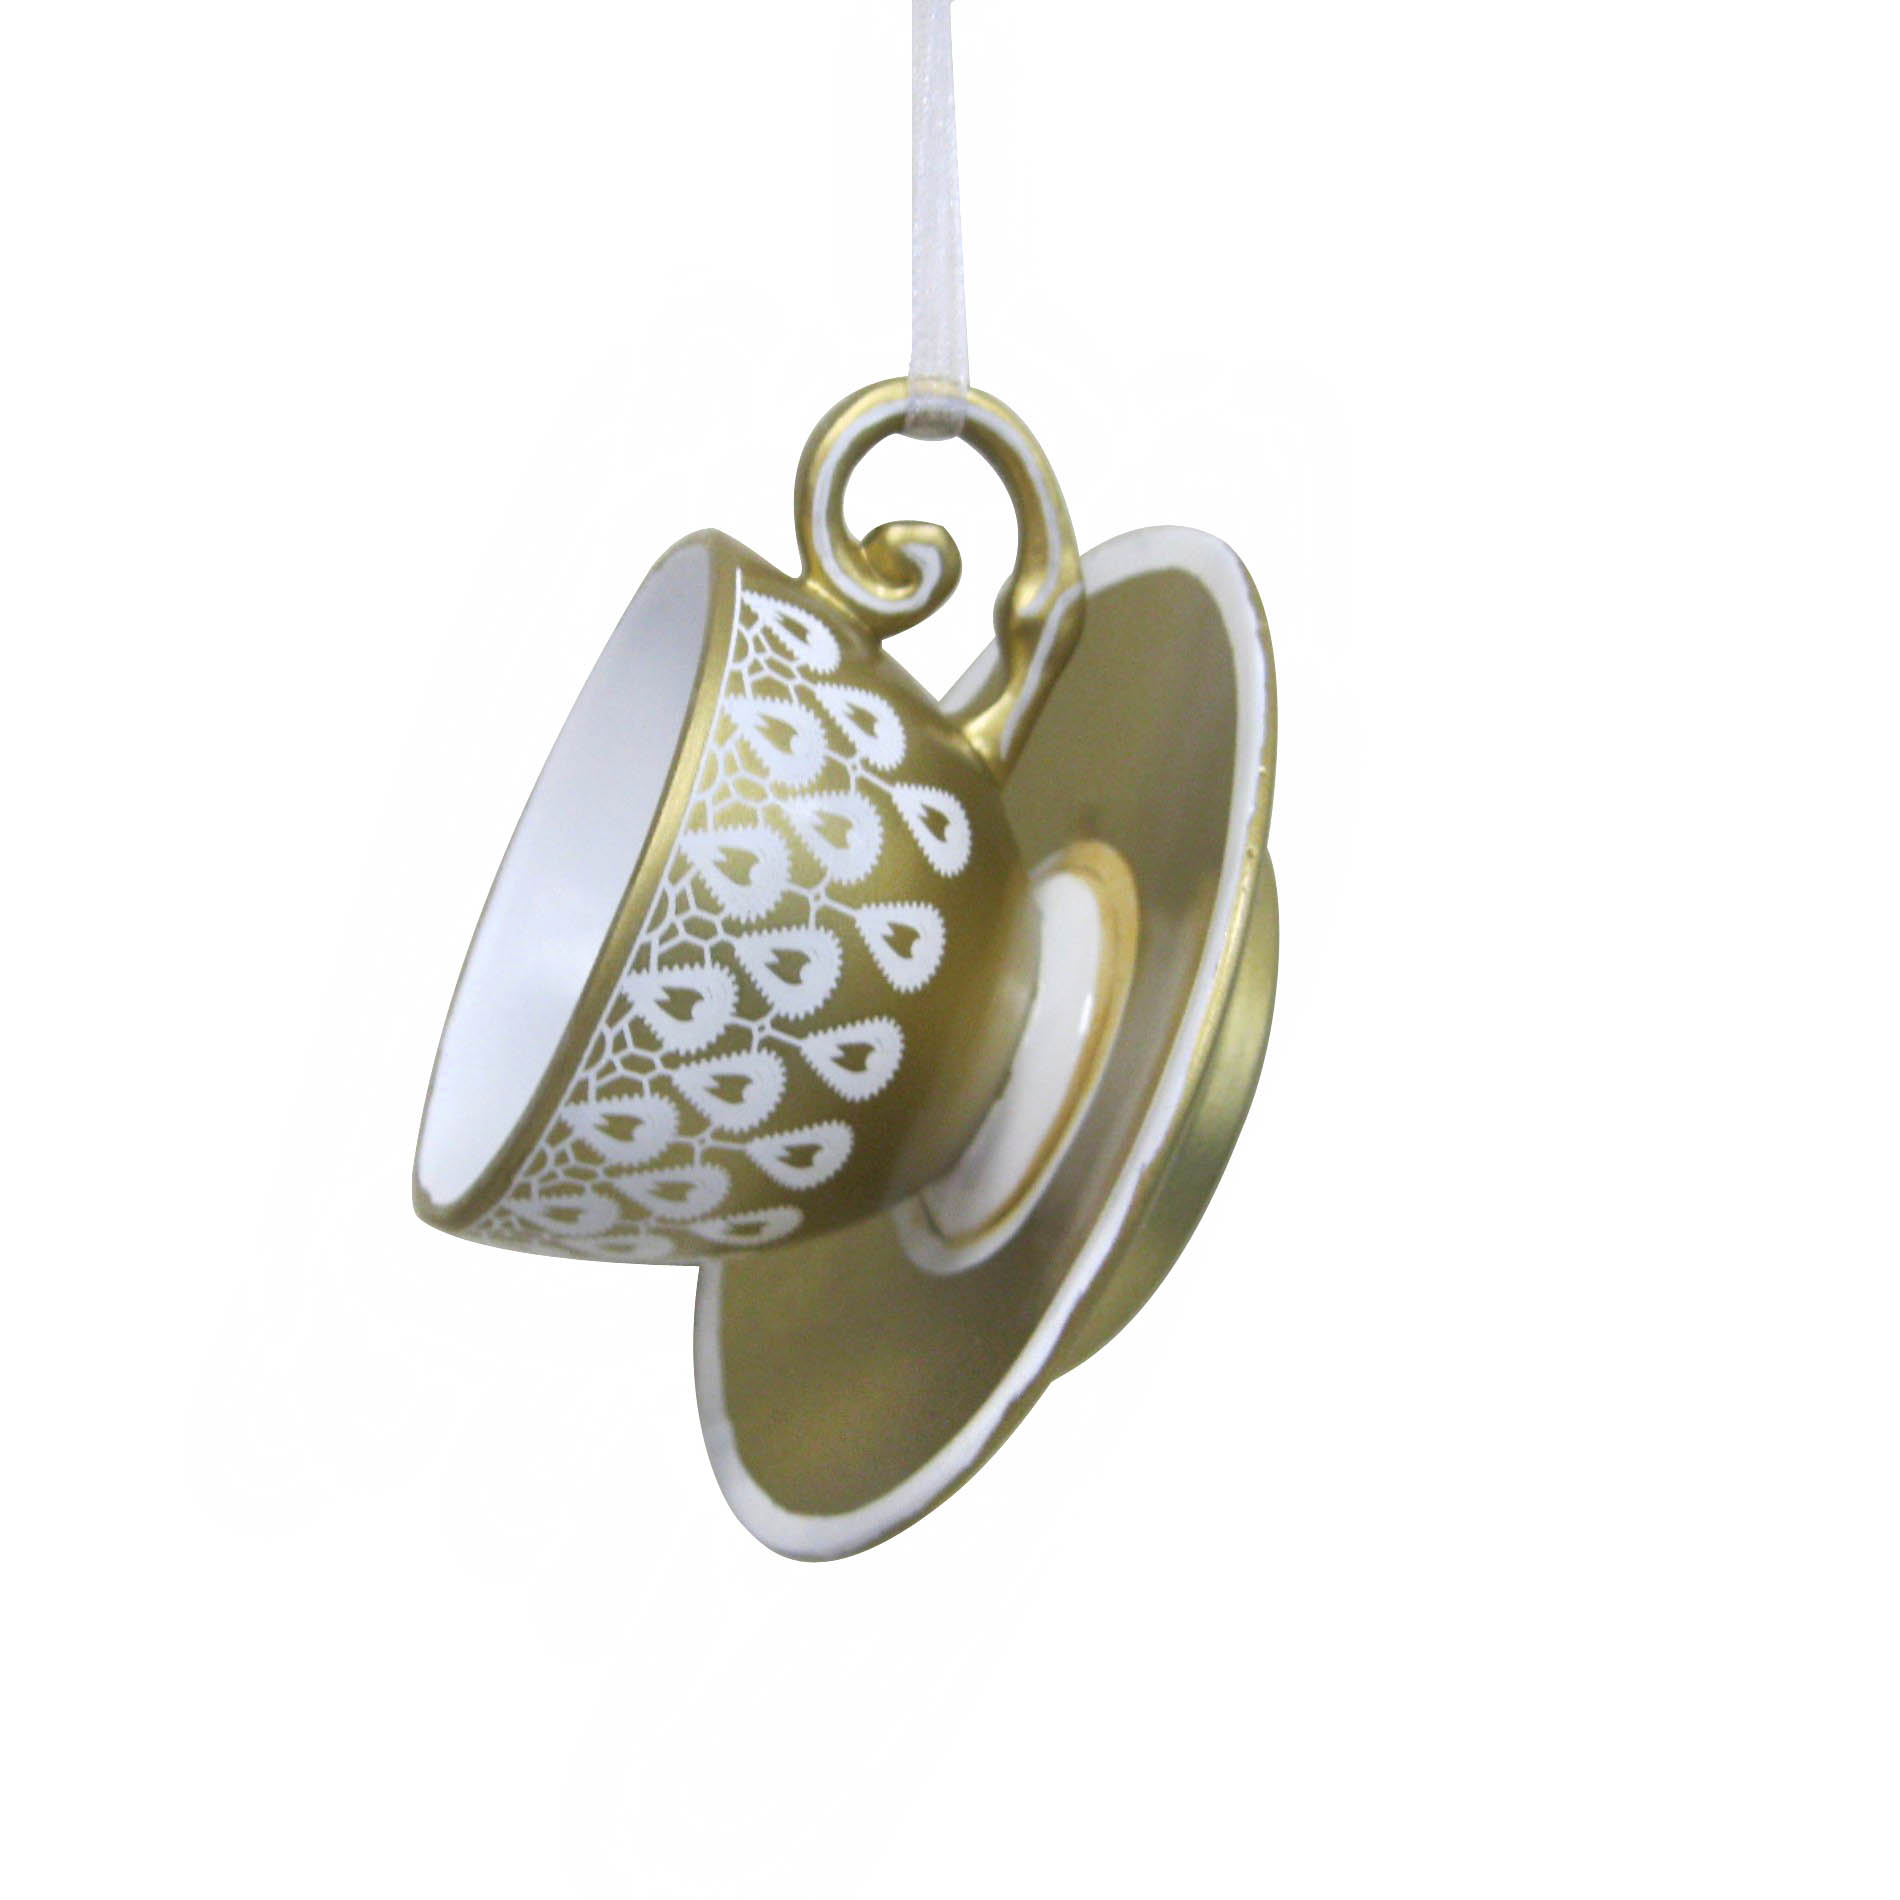 2" Gold Teacup Ornament